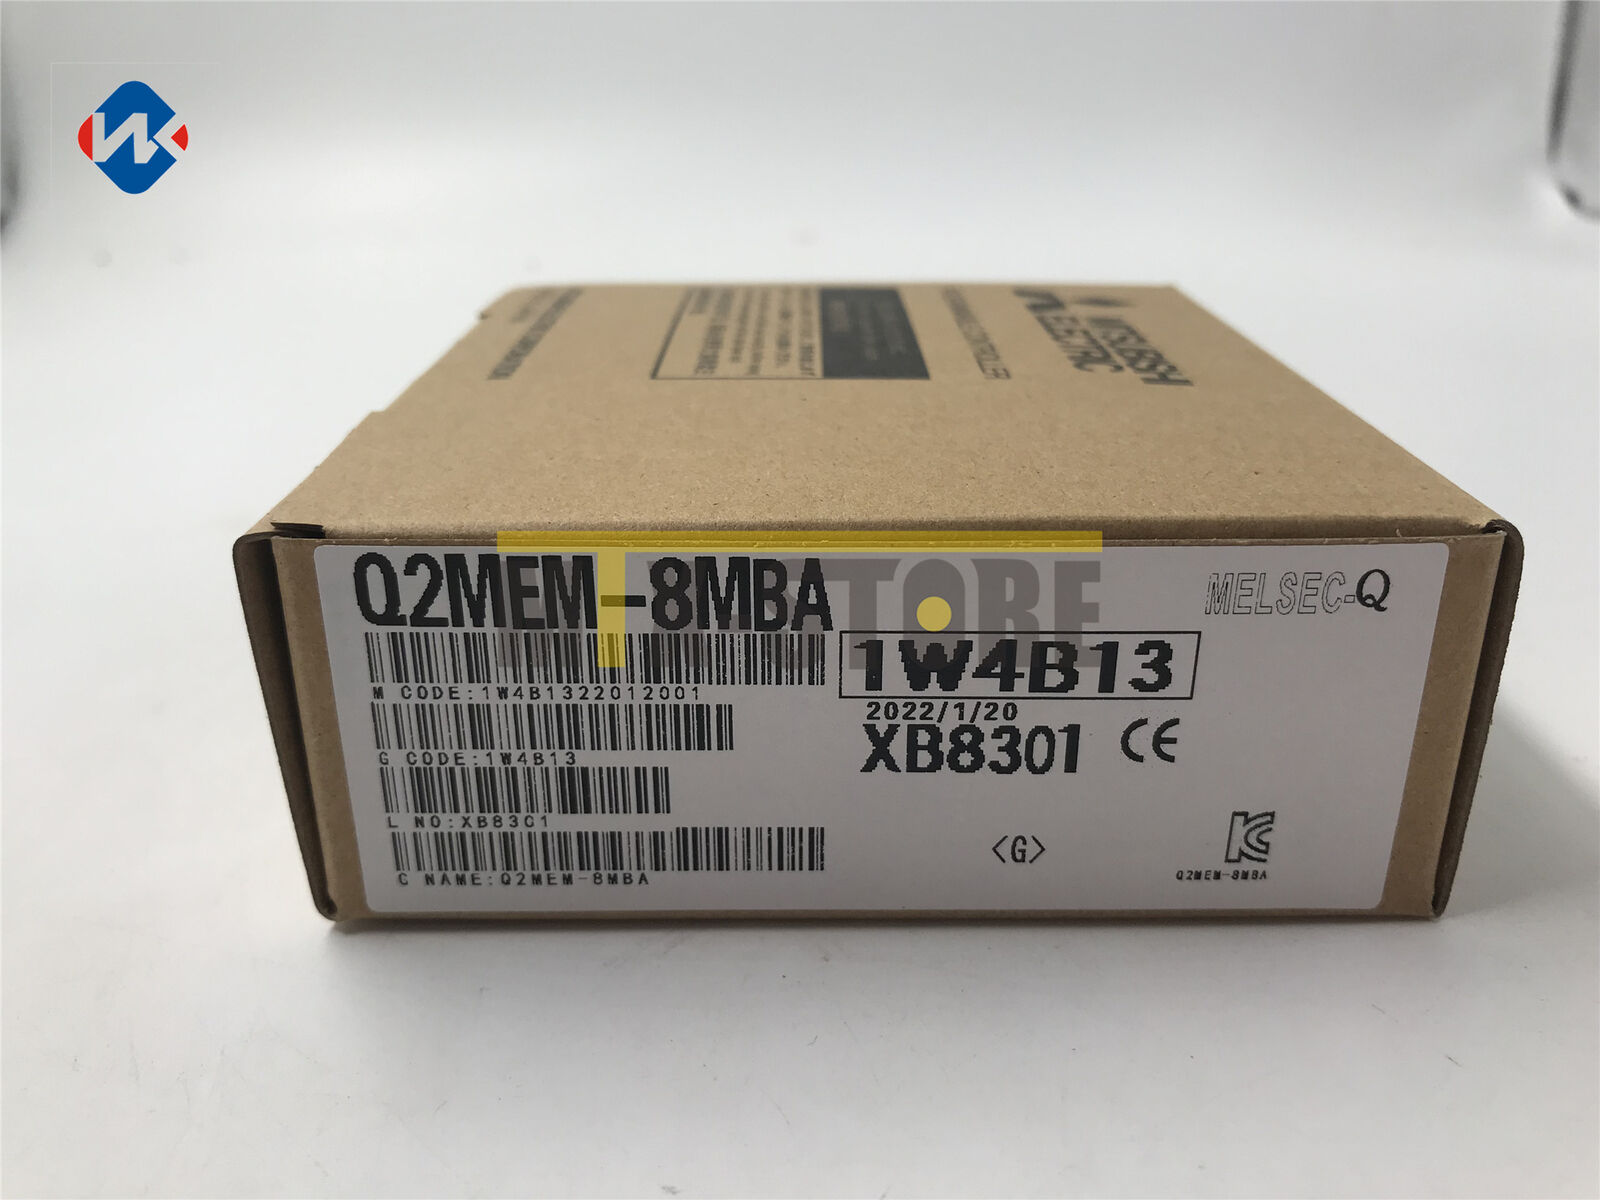 1pcs Mitsubishi Memory Card Q2MEM-8MBA New In Box